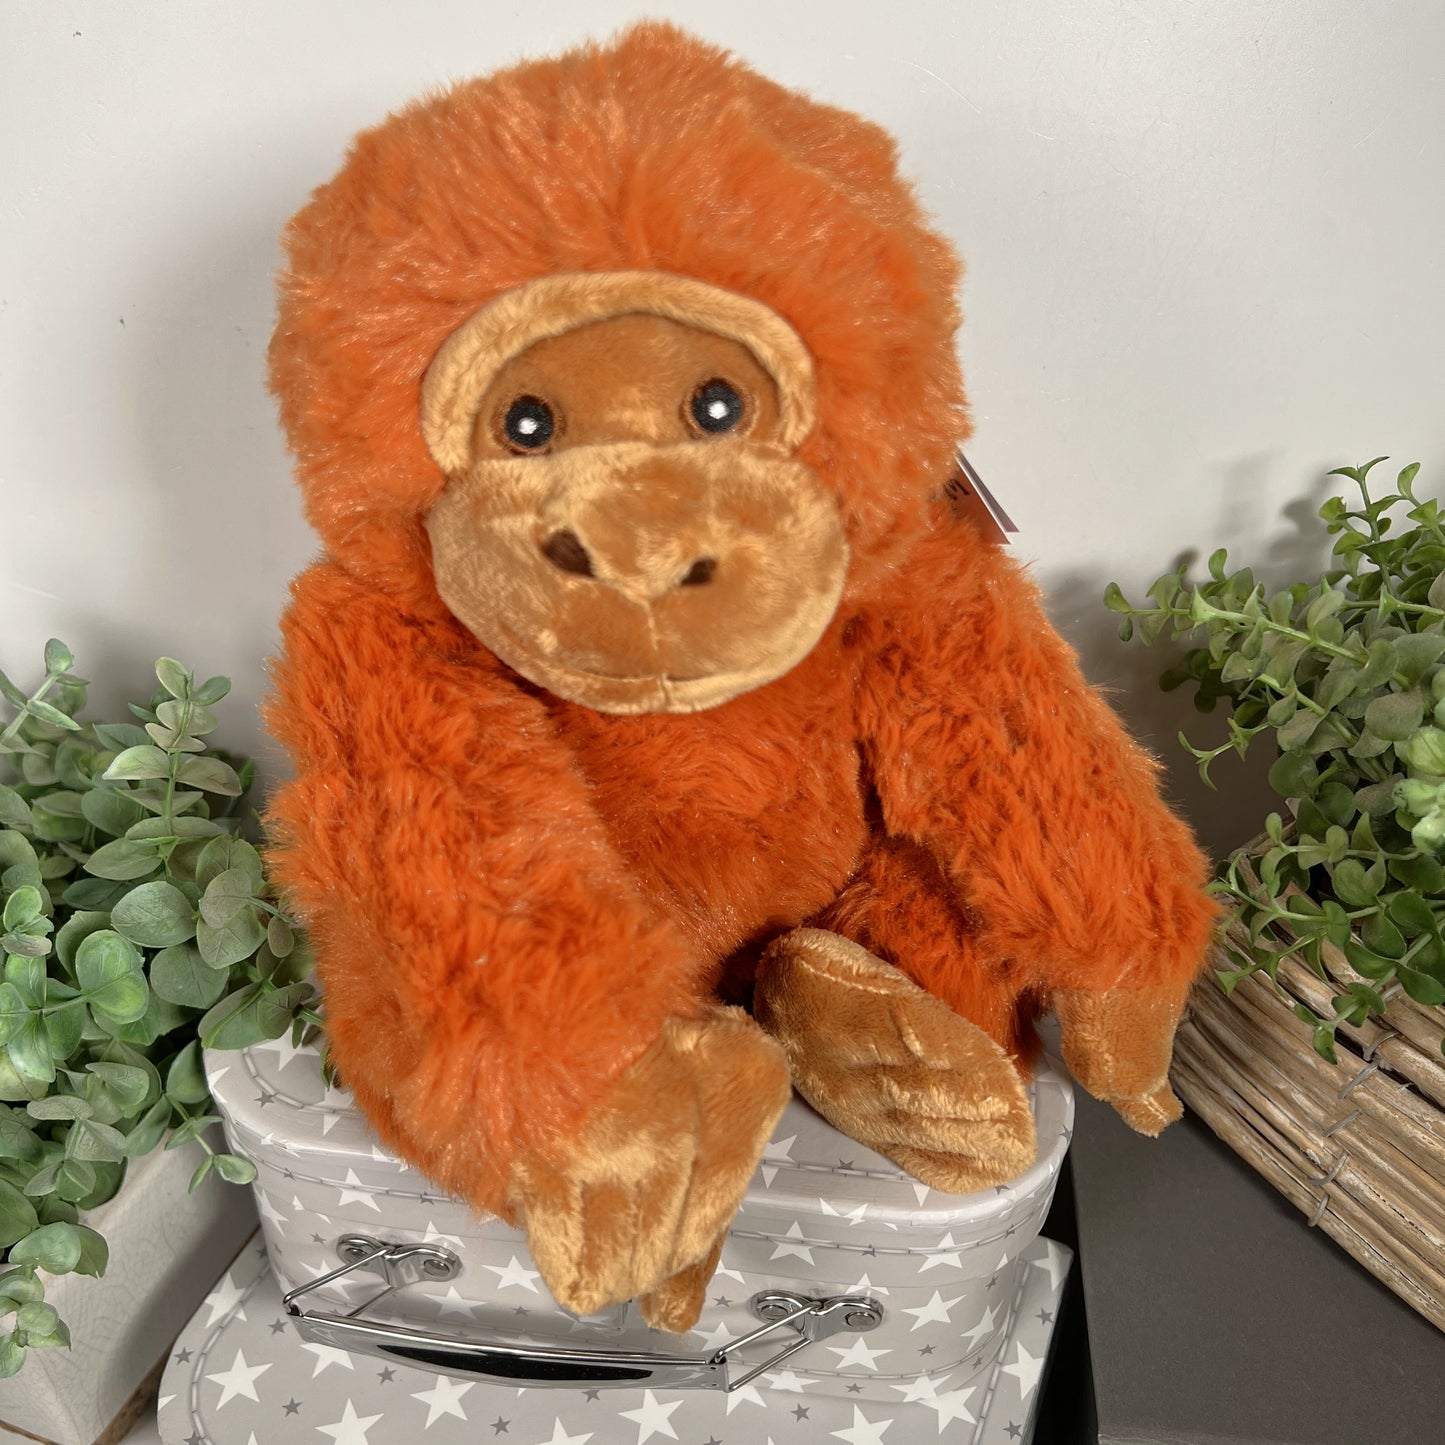 Cuddly eco plush orangutang baby toy.